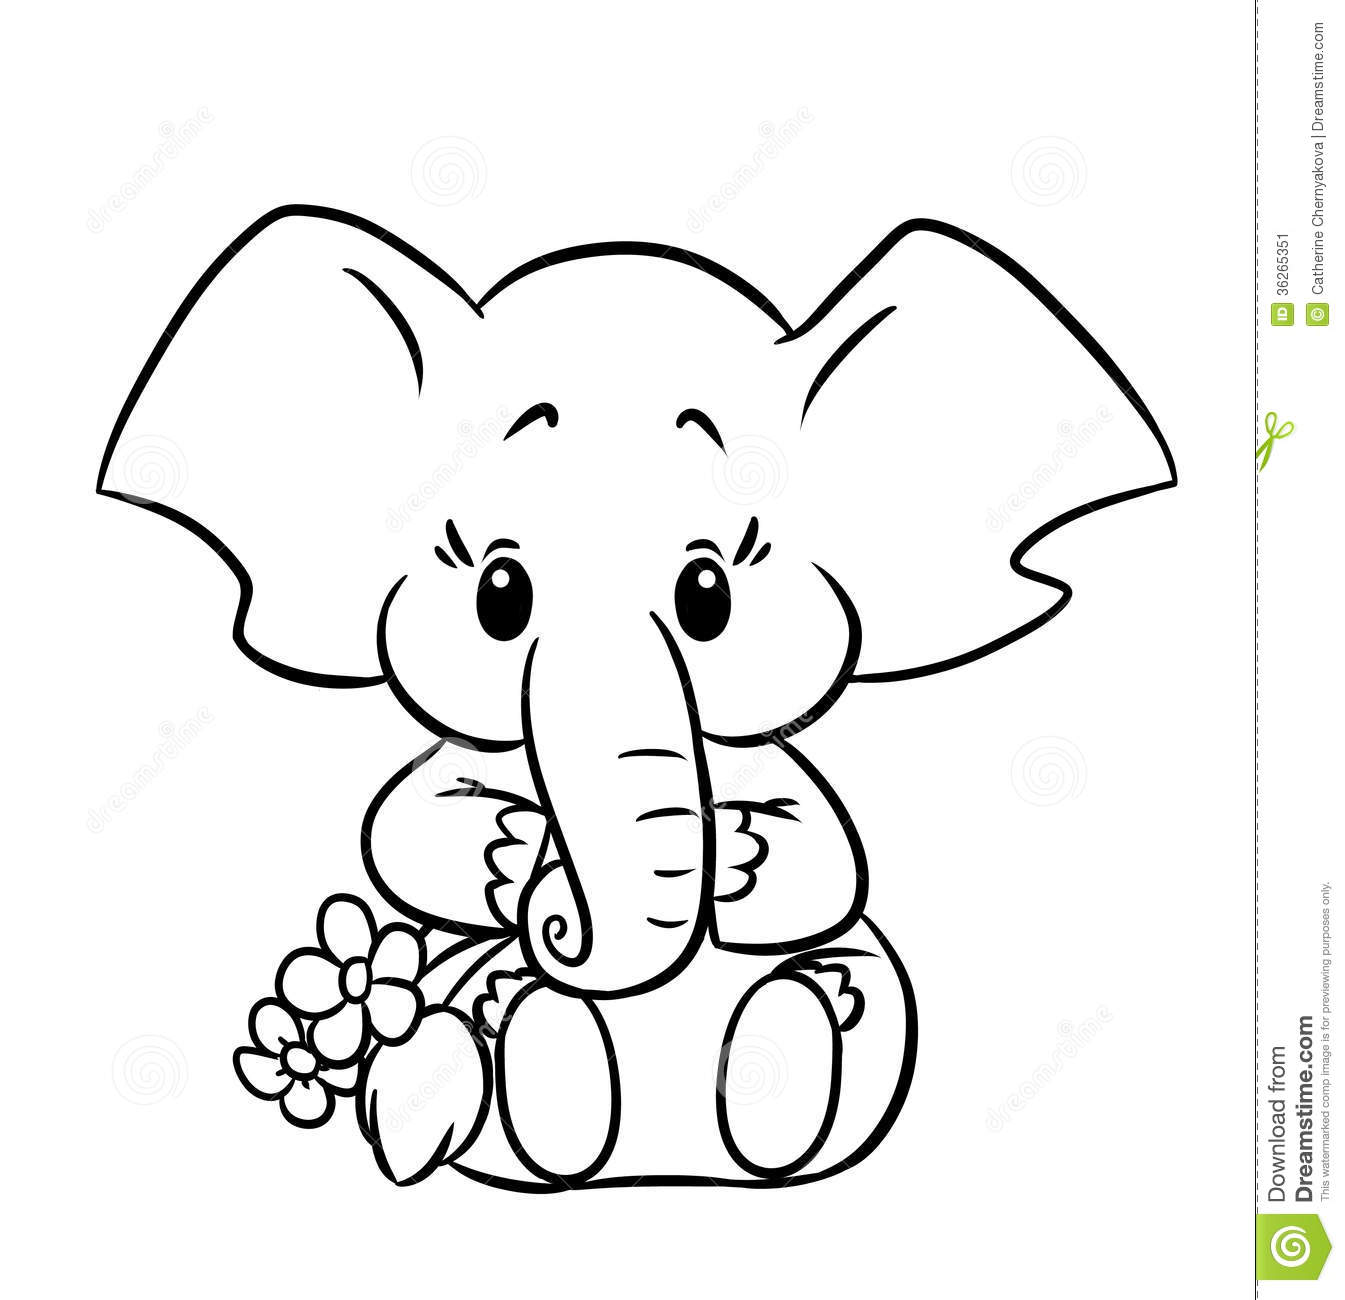 e elephant coloring pages - photo #44